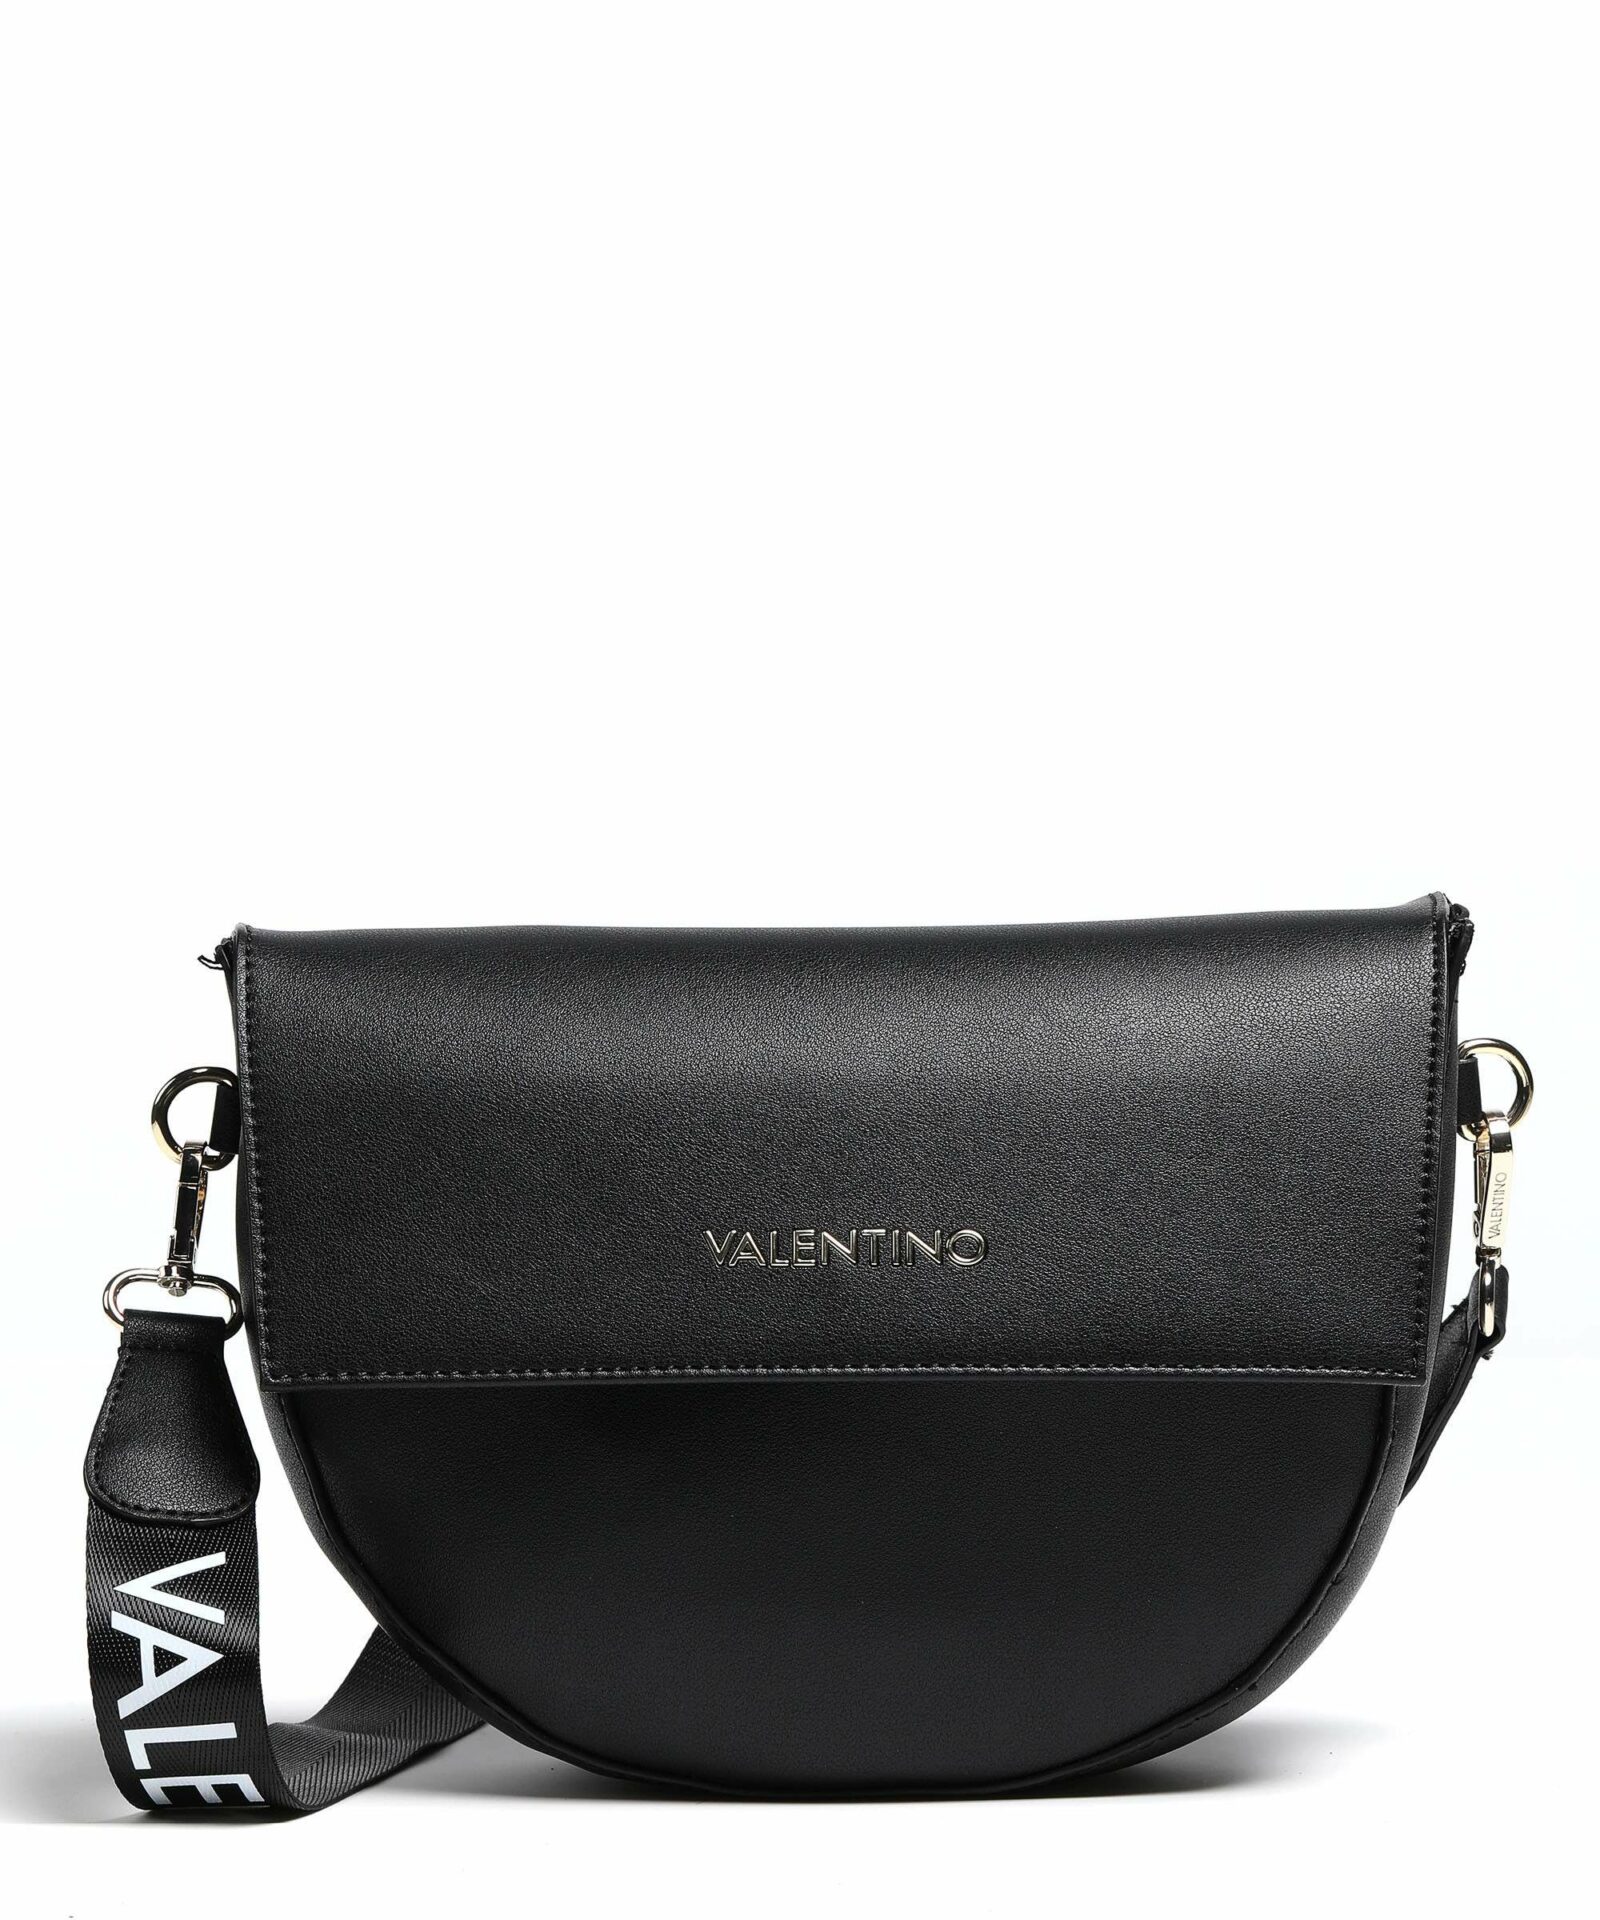 VALENTINO BIG BAG PRICE #10,000 - Henny_luxurystore